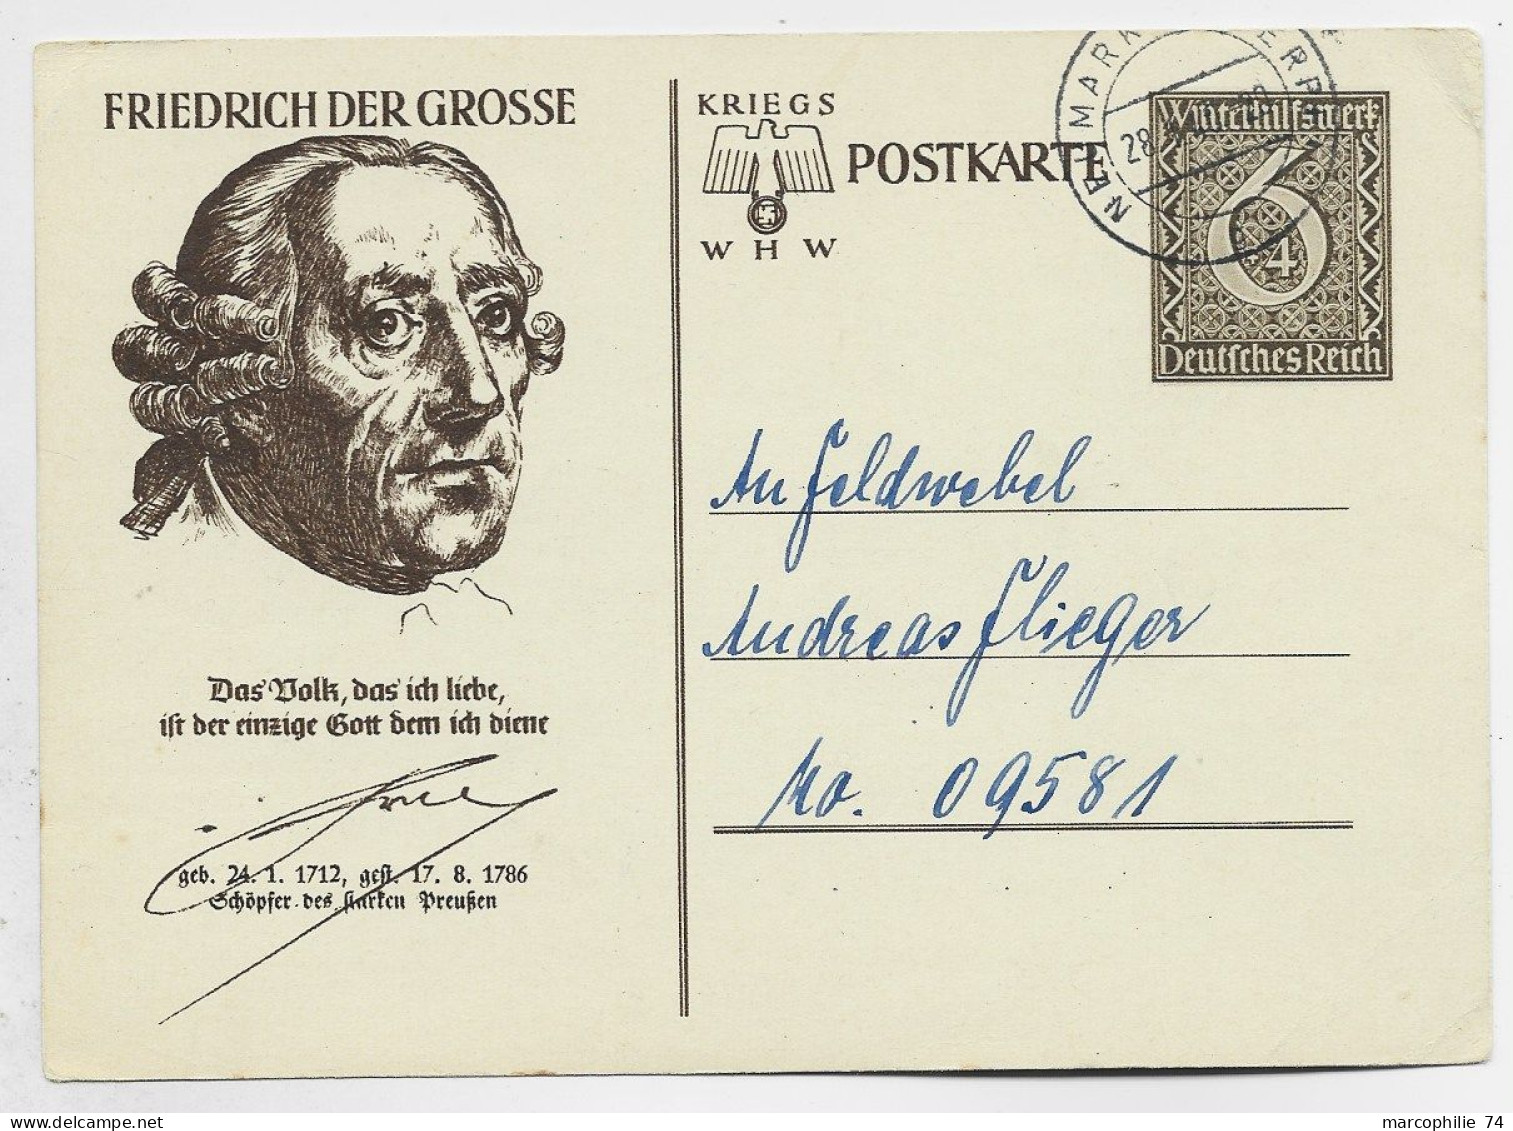 GERMANY REICH ENTIER 6C POSTKARTE FRIEDRICH GROSSE 28.1.1940 TO N°09581 - Postcards